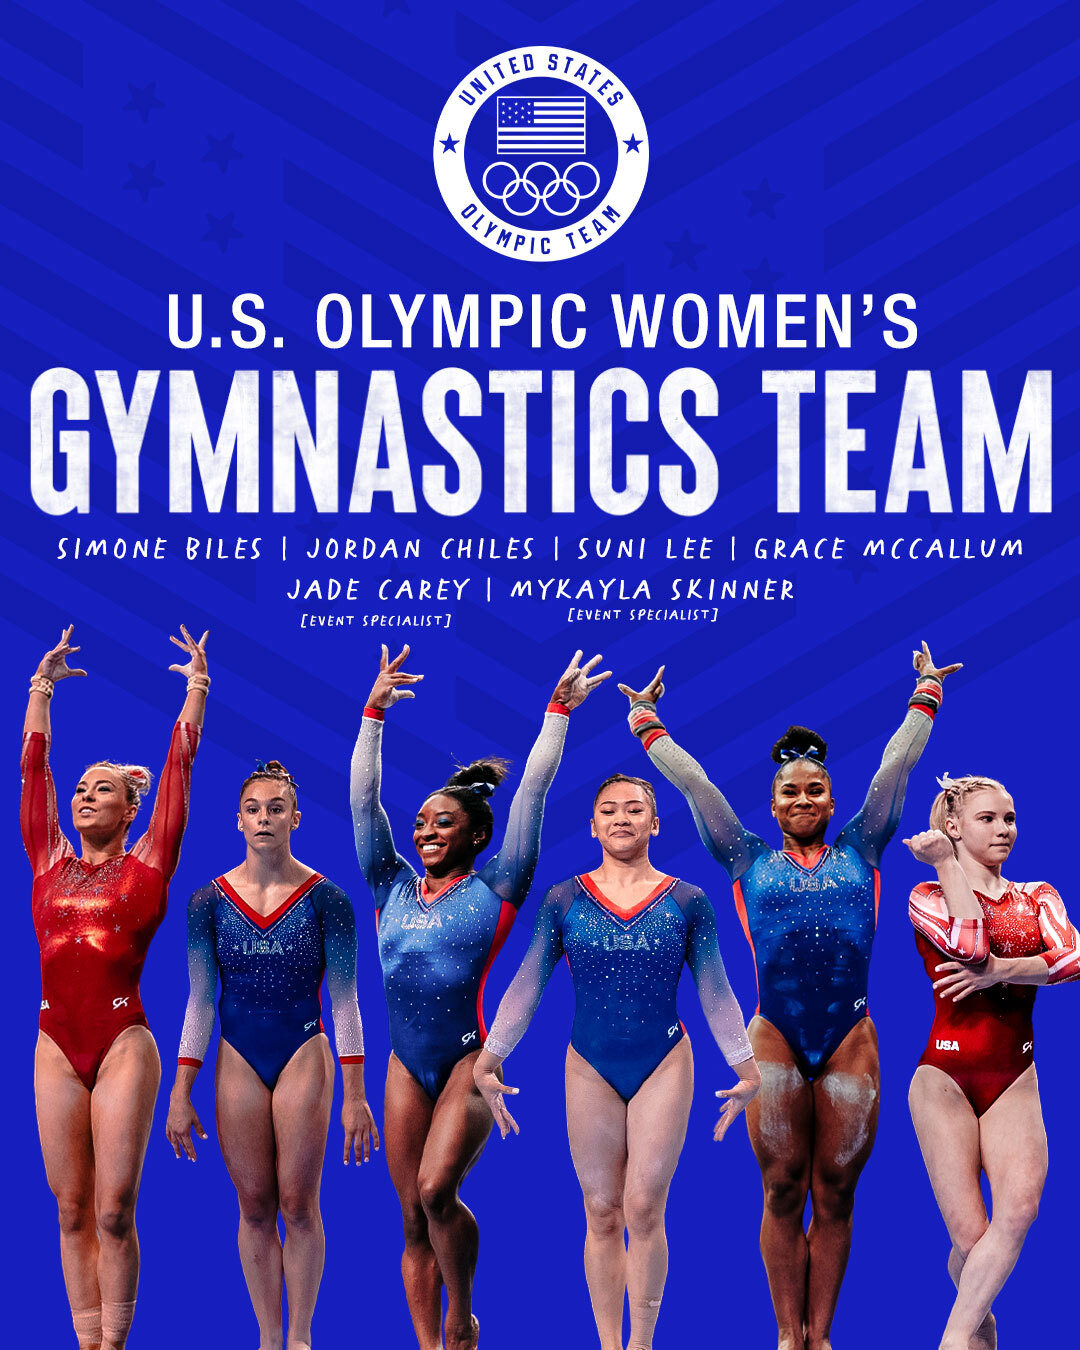 Team Usa The Best Of The Best Of The Best Please Welcome The U S Olympic Women S Gymnastics Team Gymtrials21 T Co Yazn8jtcx2 Twitter